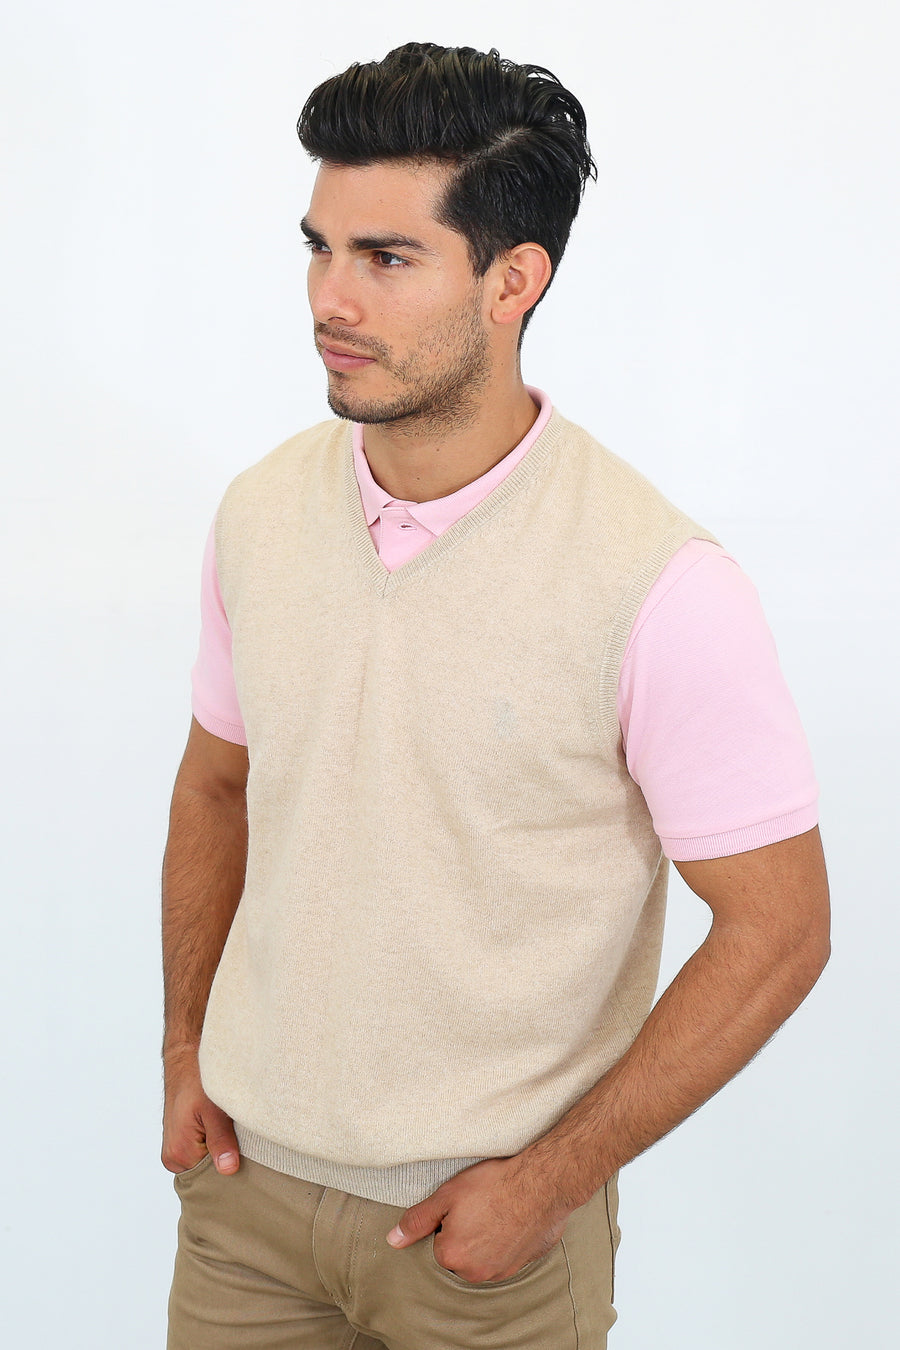 pine cashmere mens 100% pure organic cashmere v neck vest in tan color.